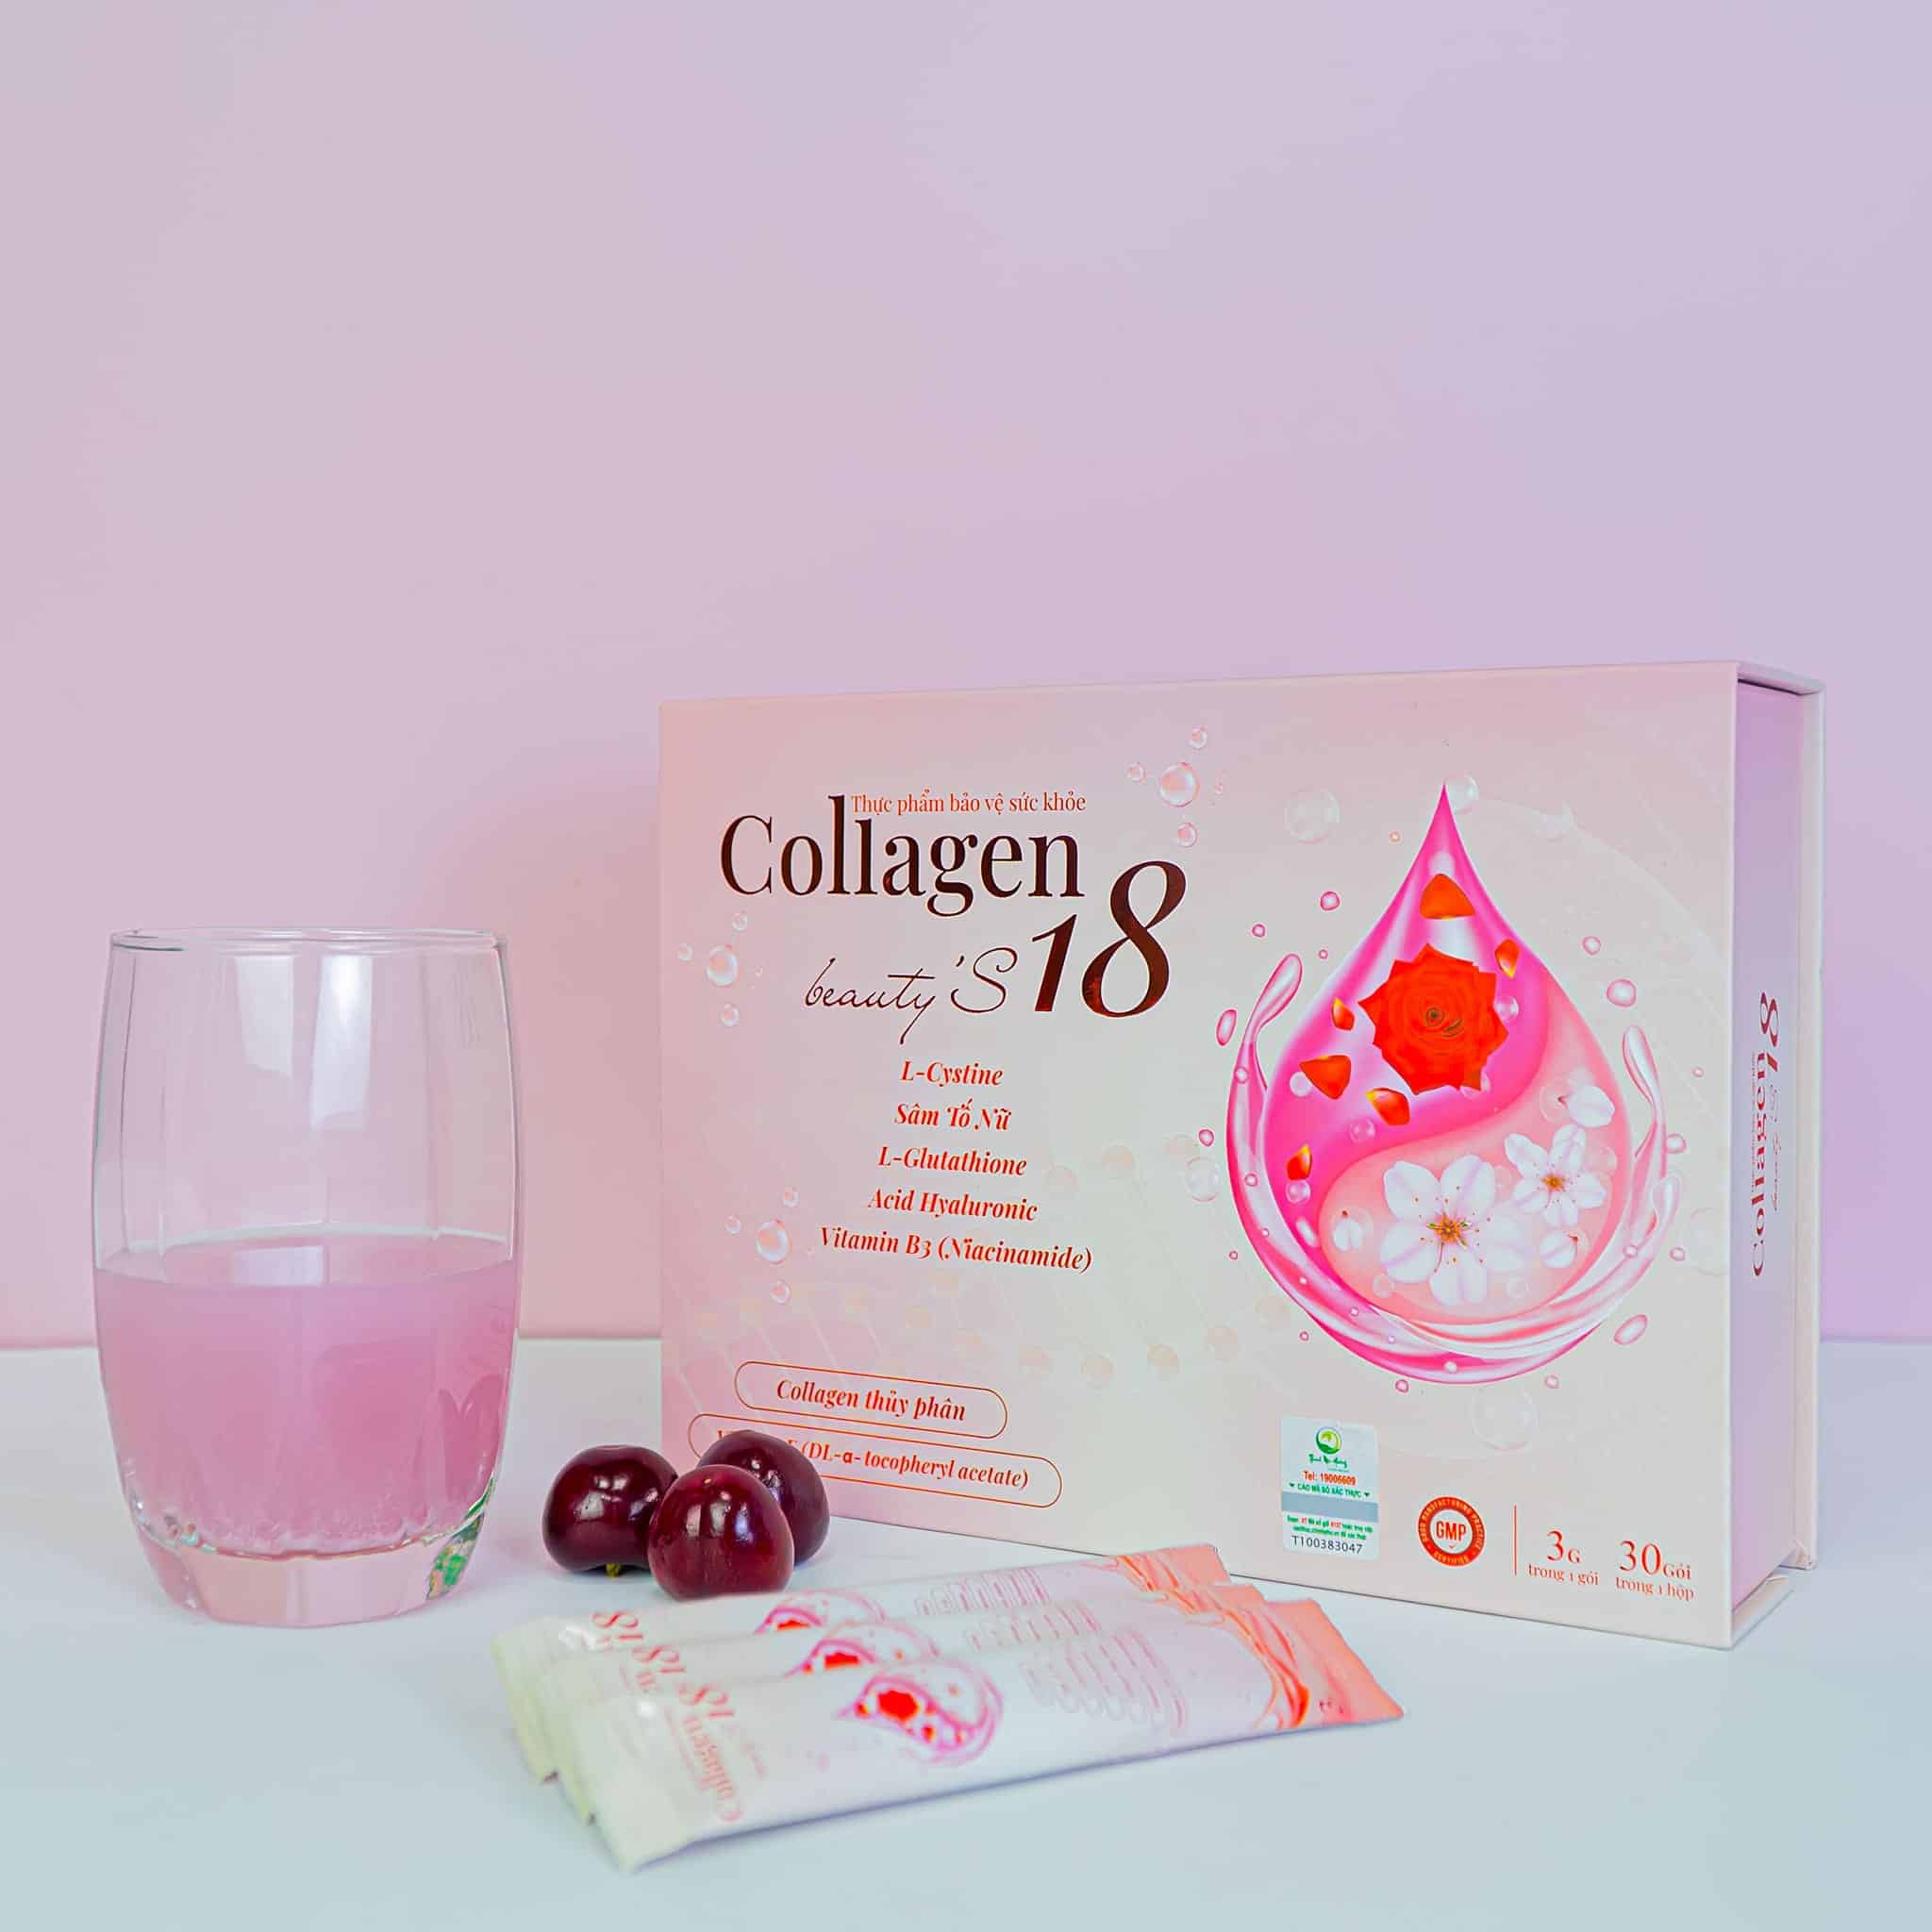 Collagen beauty's 18